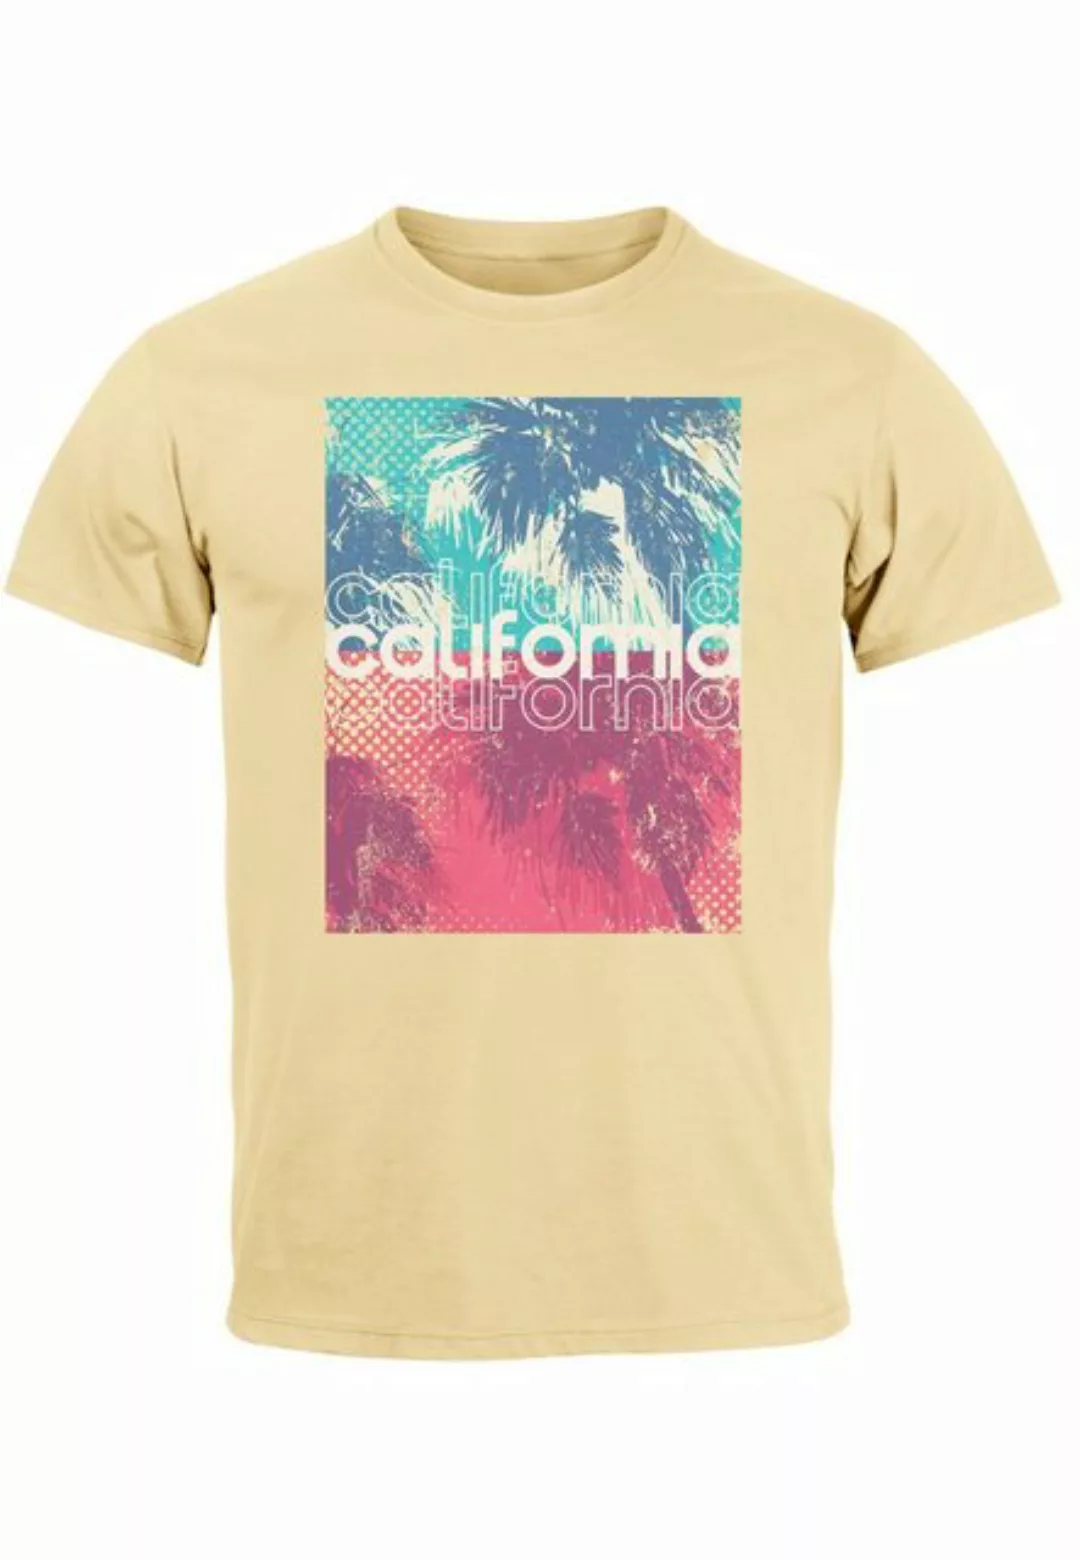 Neverless Print-Shirt Herren T-Shirt Top California Palmen Sommer Foto Prin günstig online kaufen